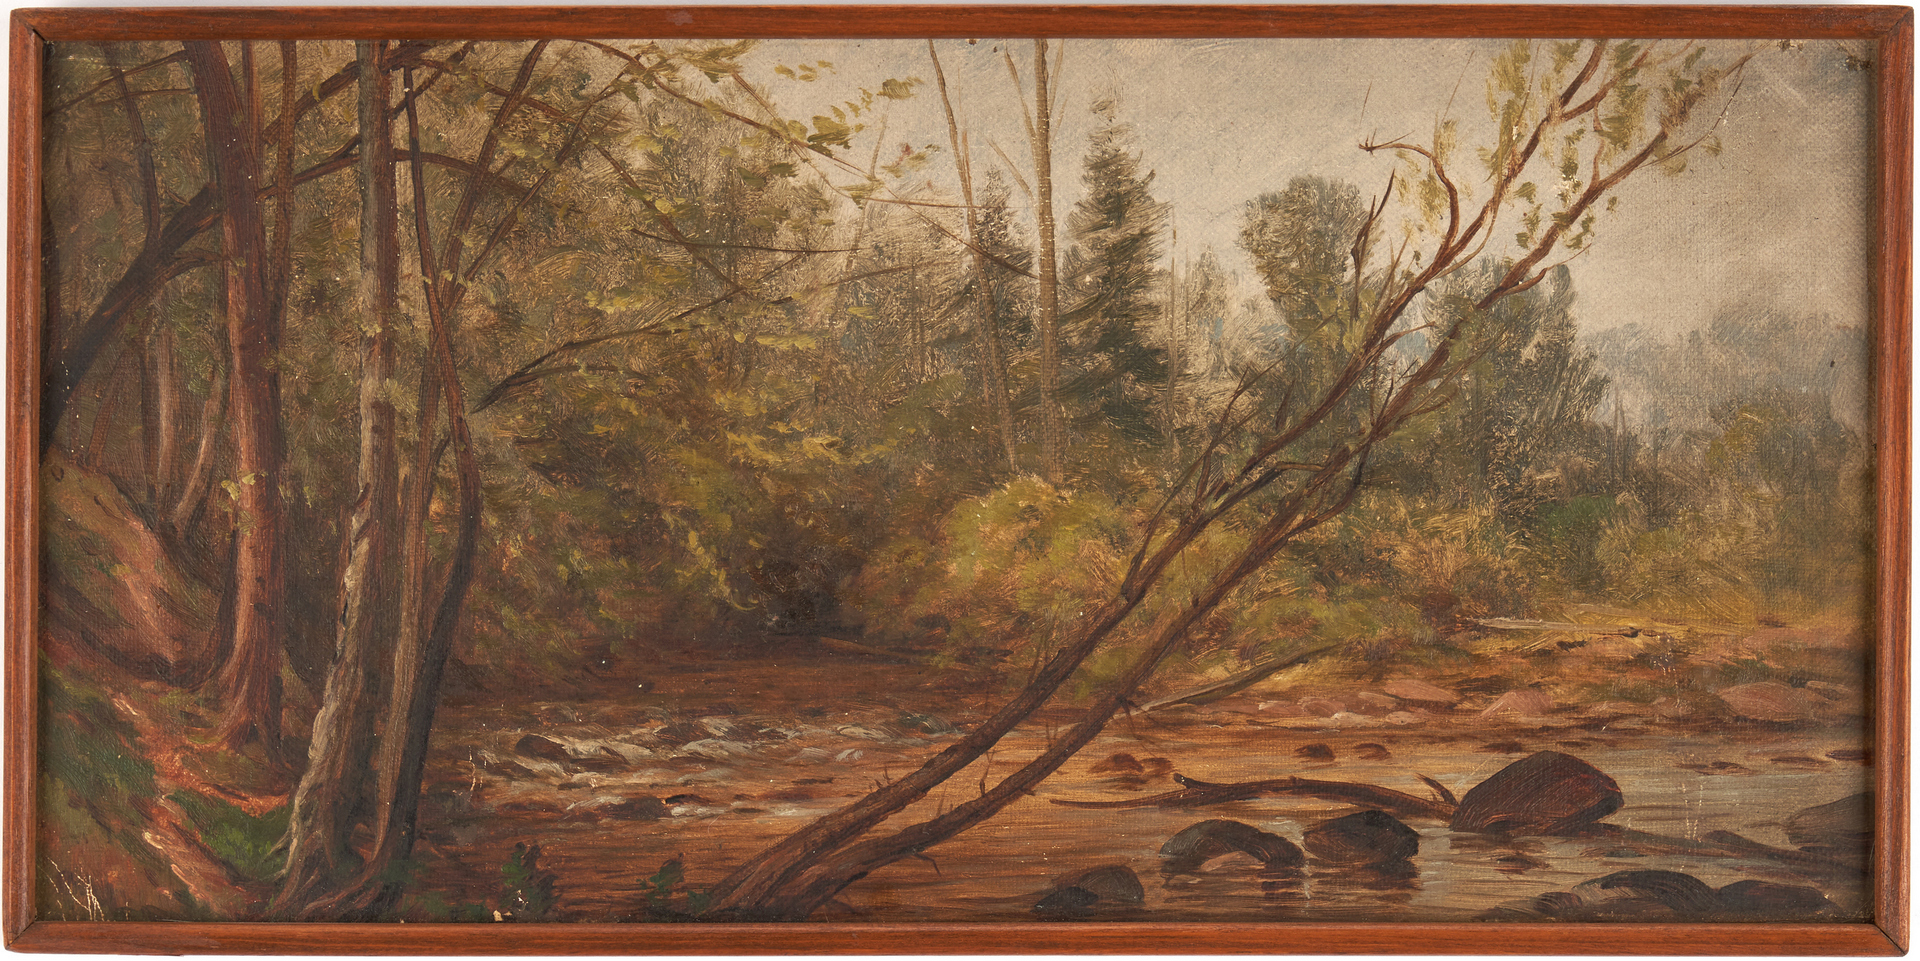 Lot 324: Oil on Board Landscape, attrib. Thomas Campbell